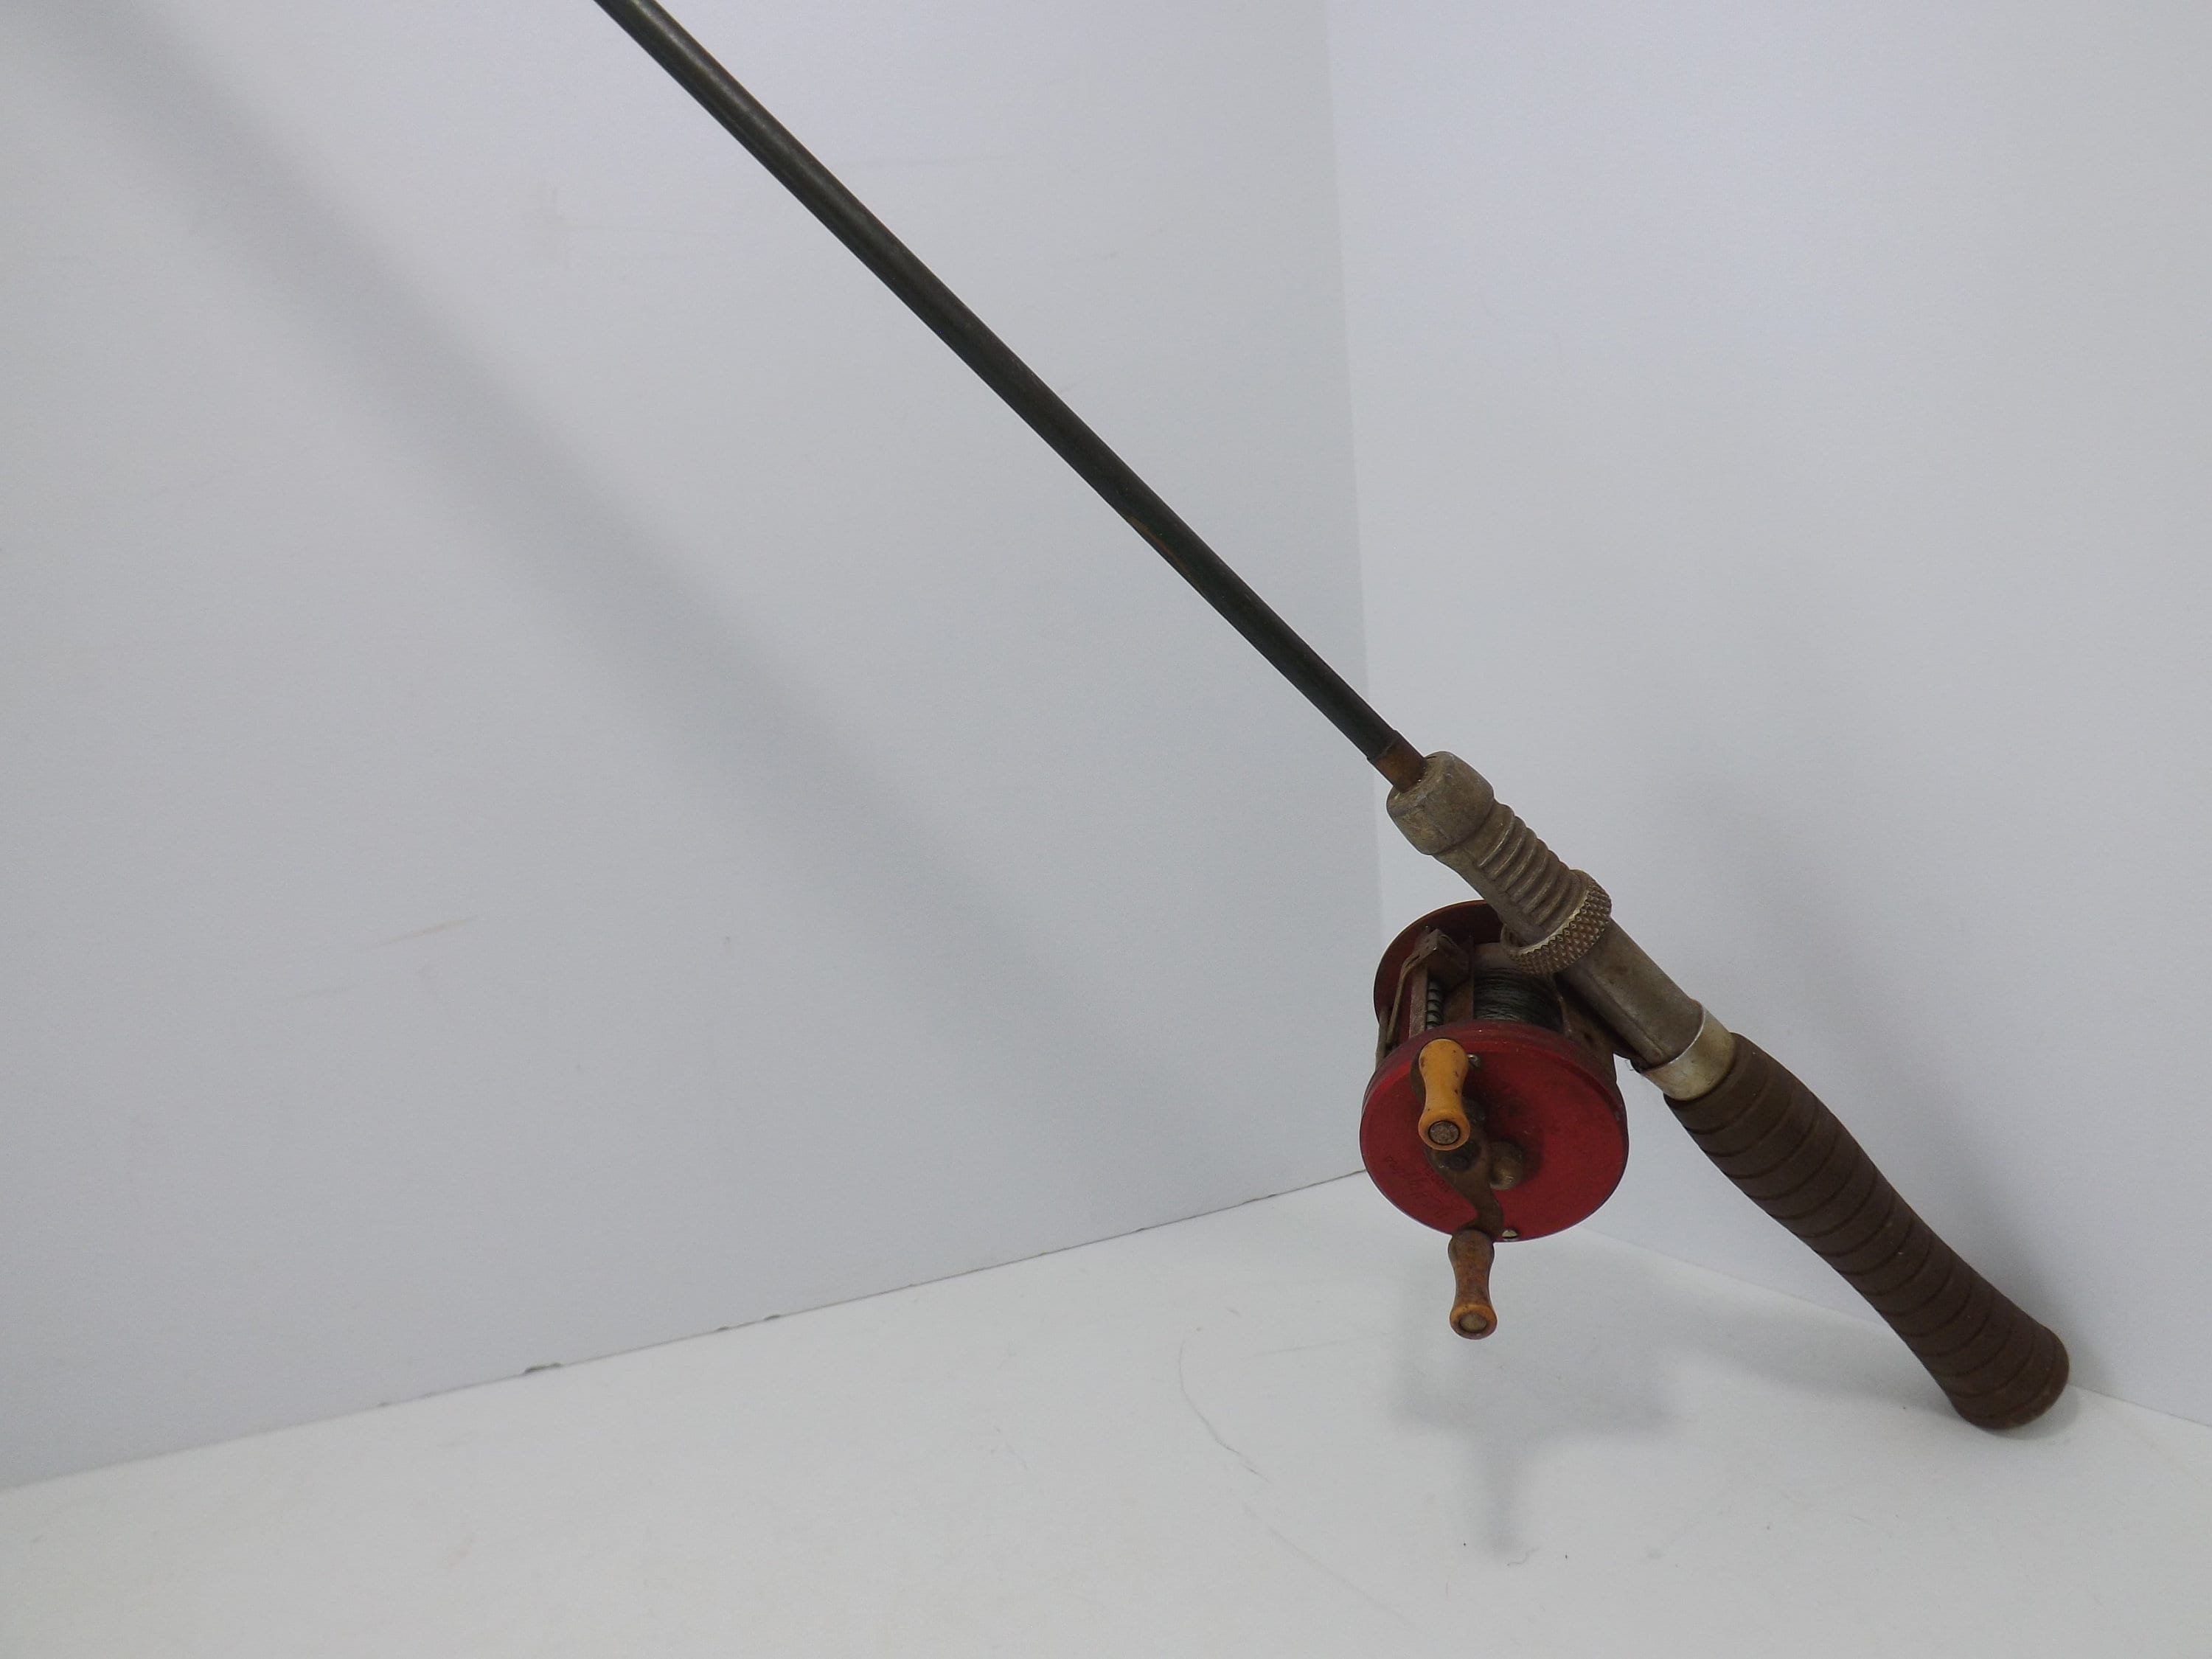 Recreational Mid Size Fishing Pole, Used Frigate Pole, Shimano IX 2000R Reel  